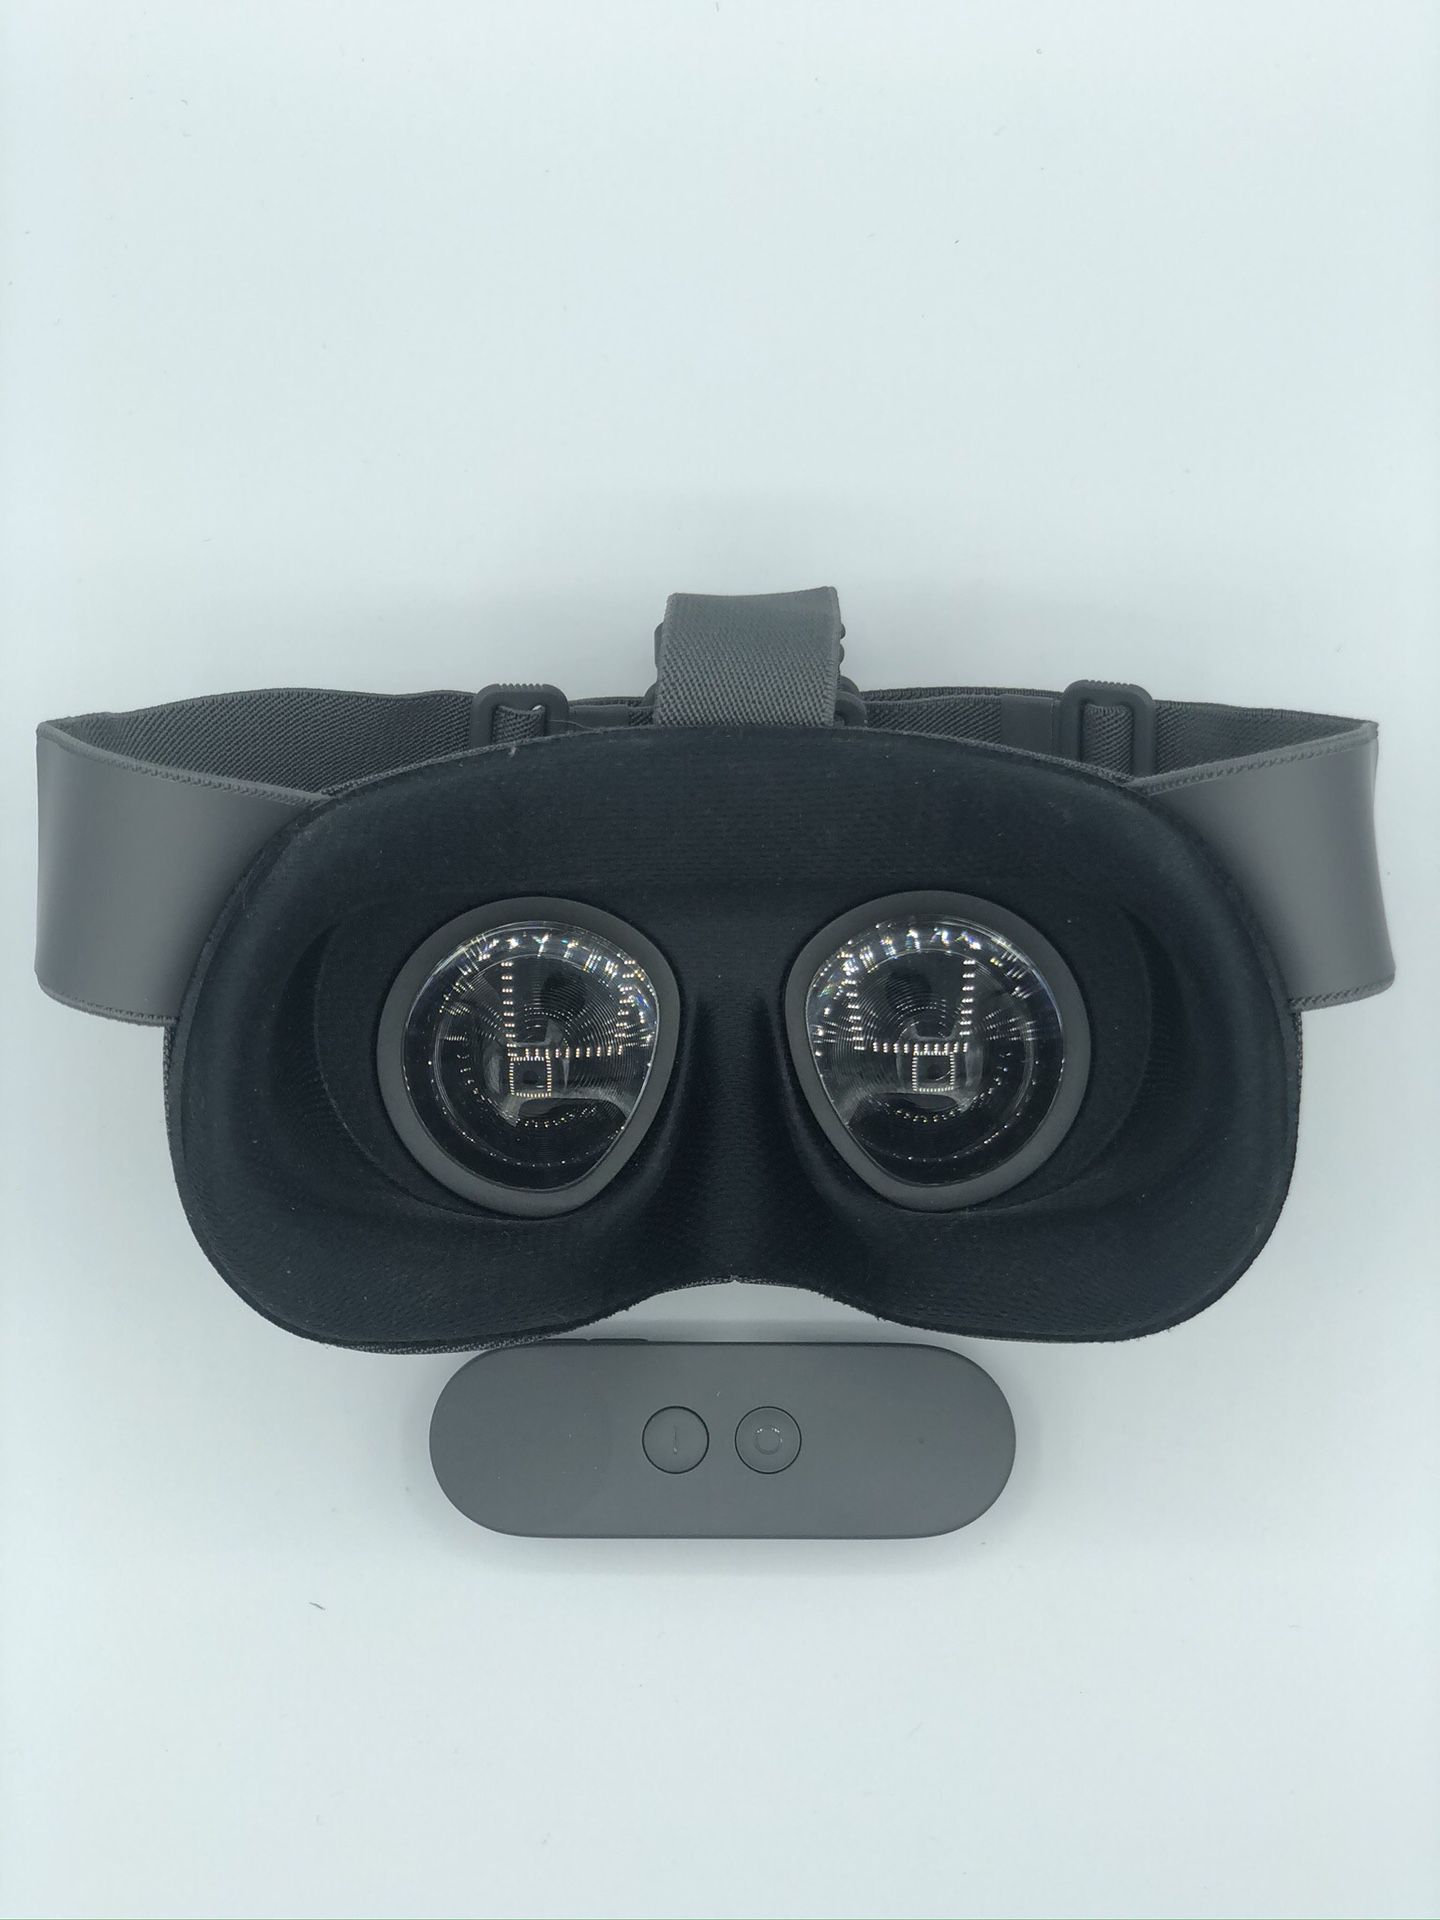 Google Daydream VR headset